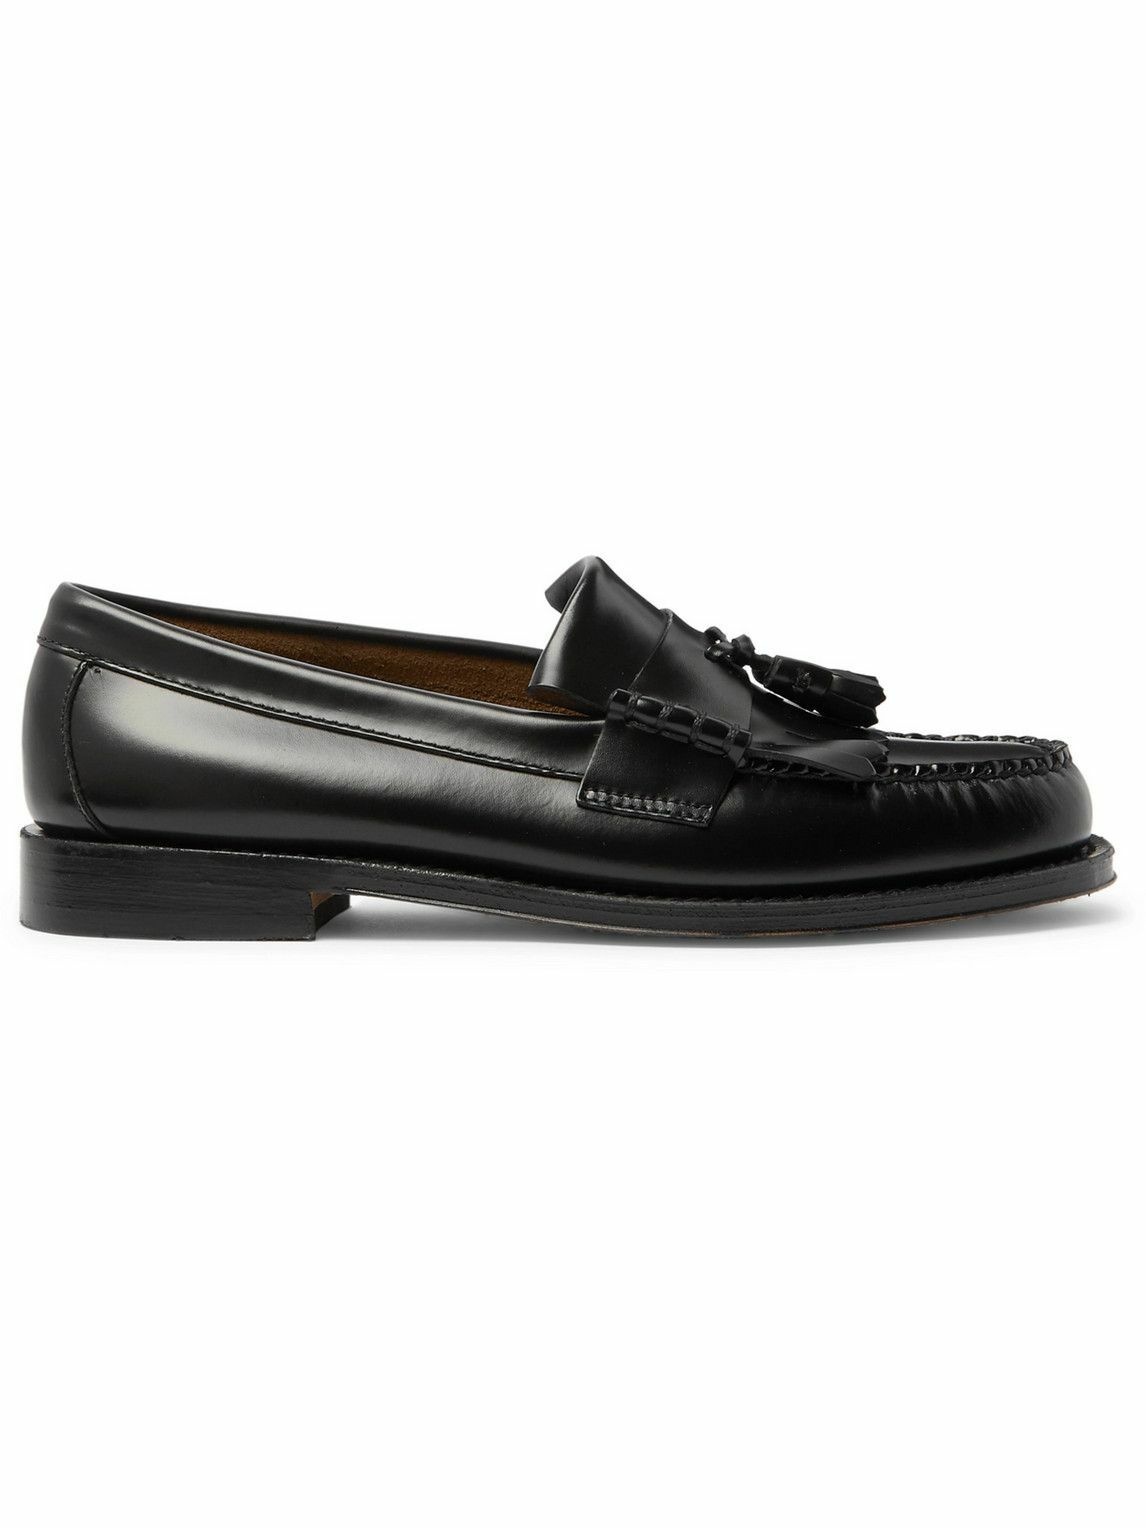 Photo: G.H. Bass & Co. - Weejuns Layton Kiltie Moc II Leather Tasselled Loafers - Black